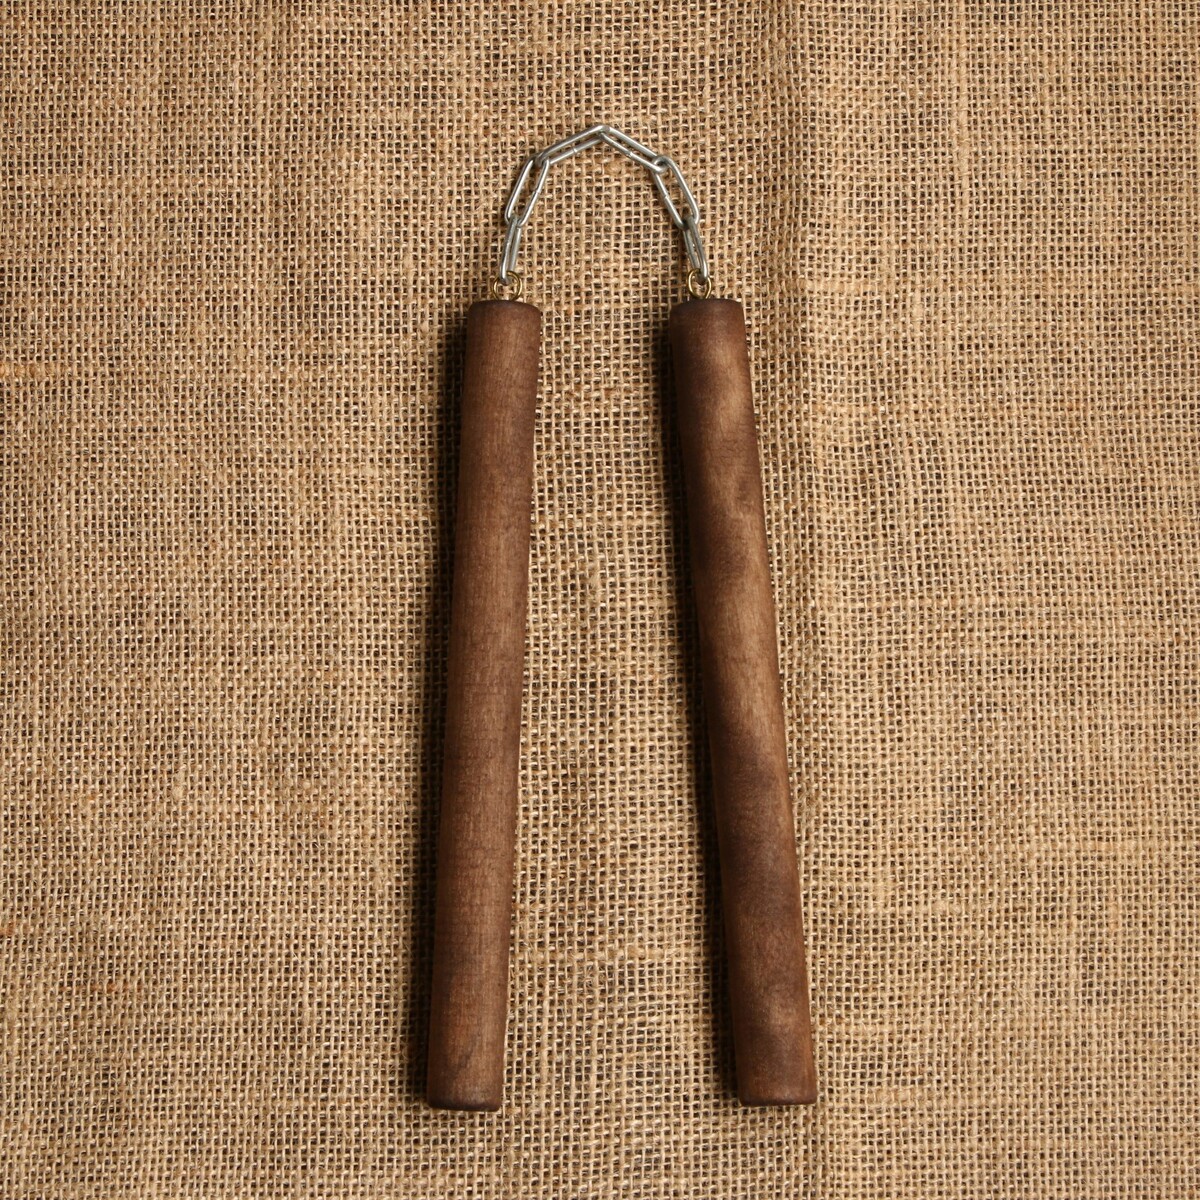 Сувенир деревянный сувенир деревянный мачете микс